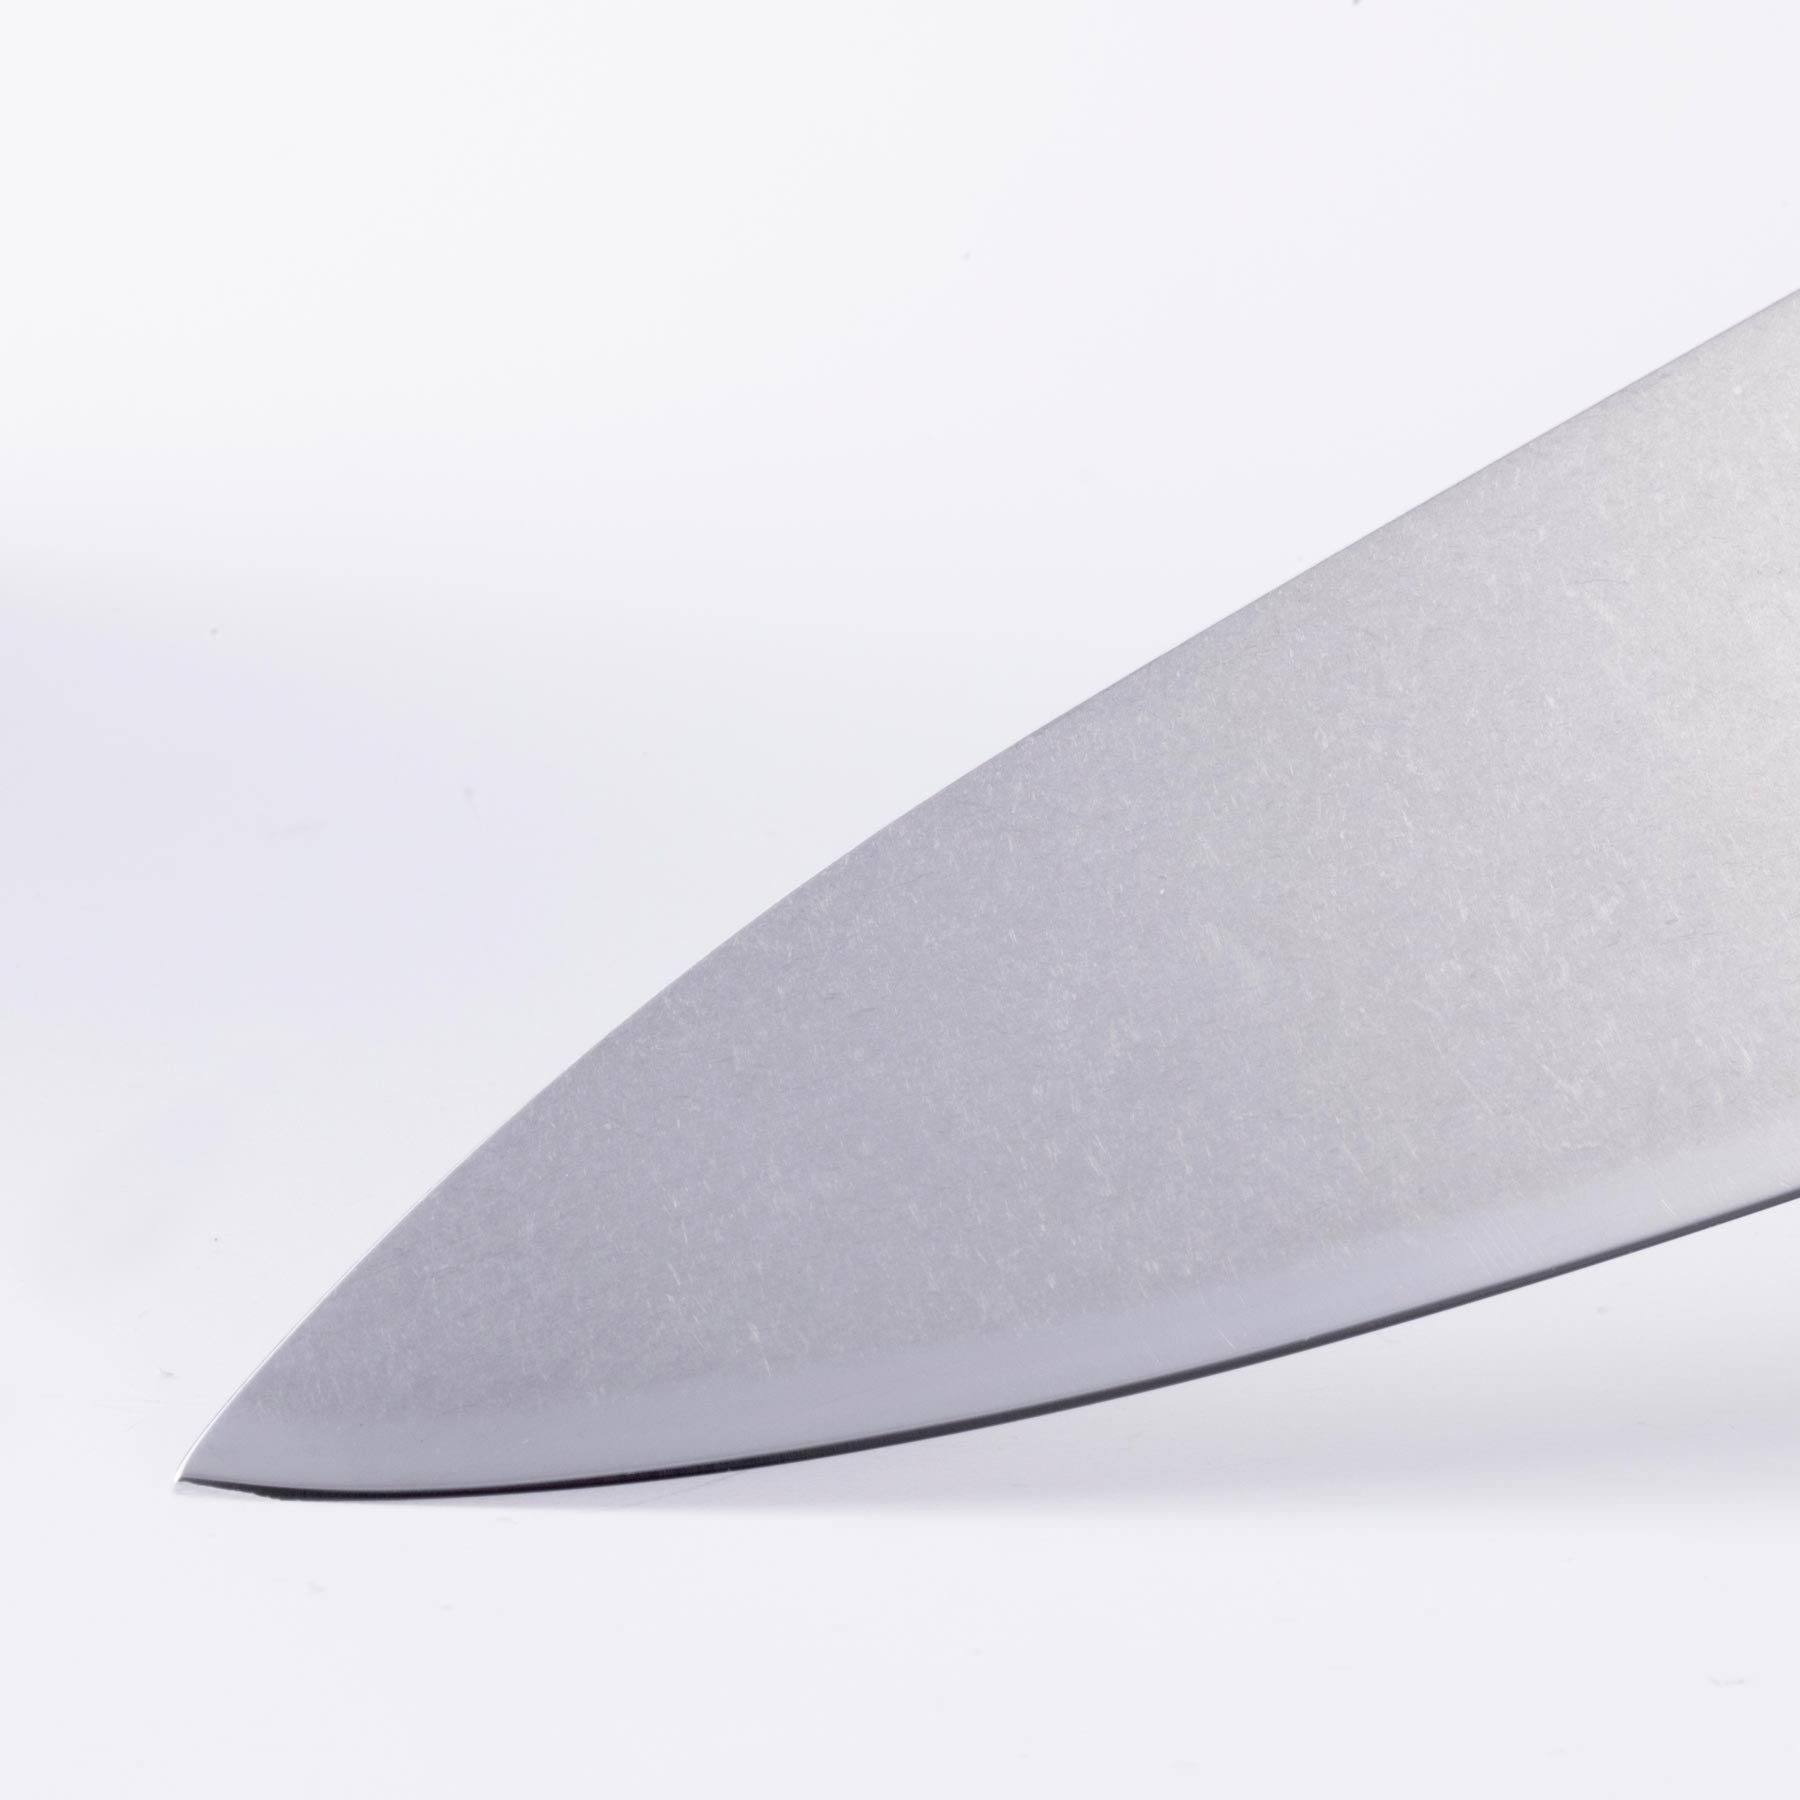 Messermeister Custom - 8 Chef's Knife - Made in Solingen, Germany –  Northwest Knives